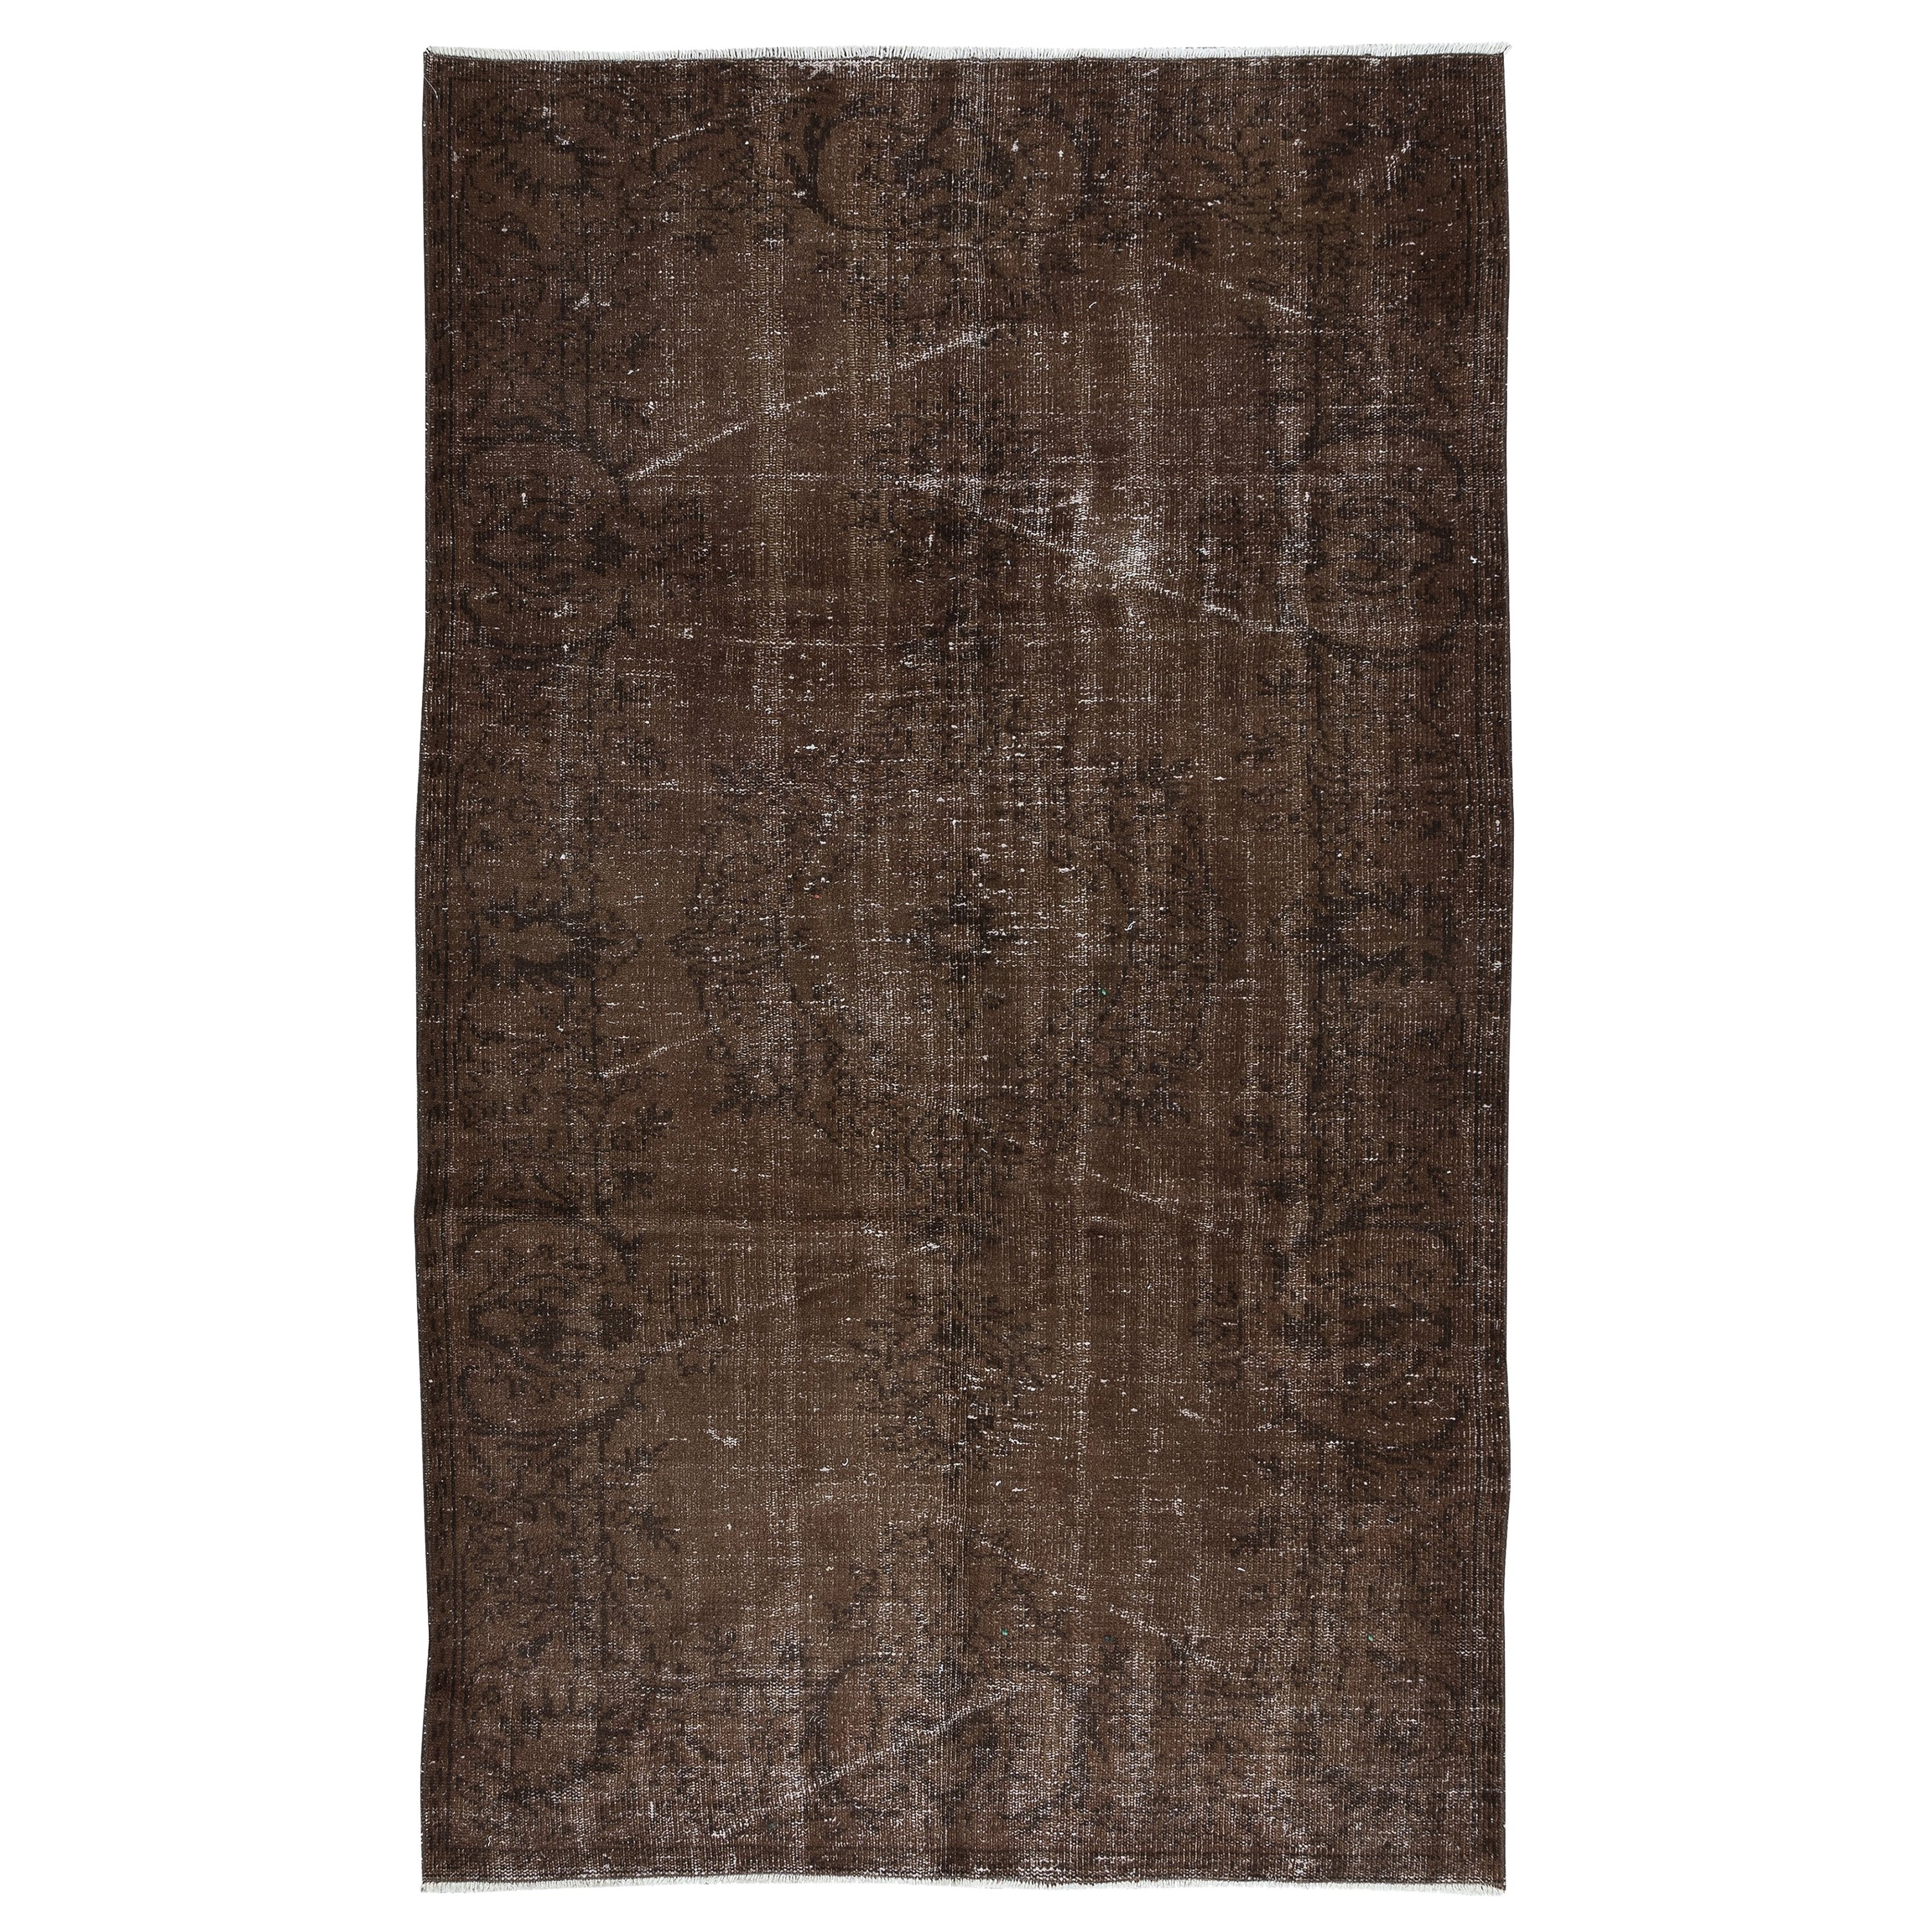 4.8x8 Ft Brown Distressed Look Handmade Rug, Modern Anatolian Shabby Chic Carpet (Tapis Anatolien Chic)